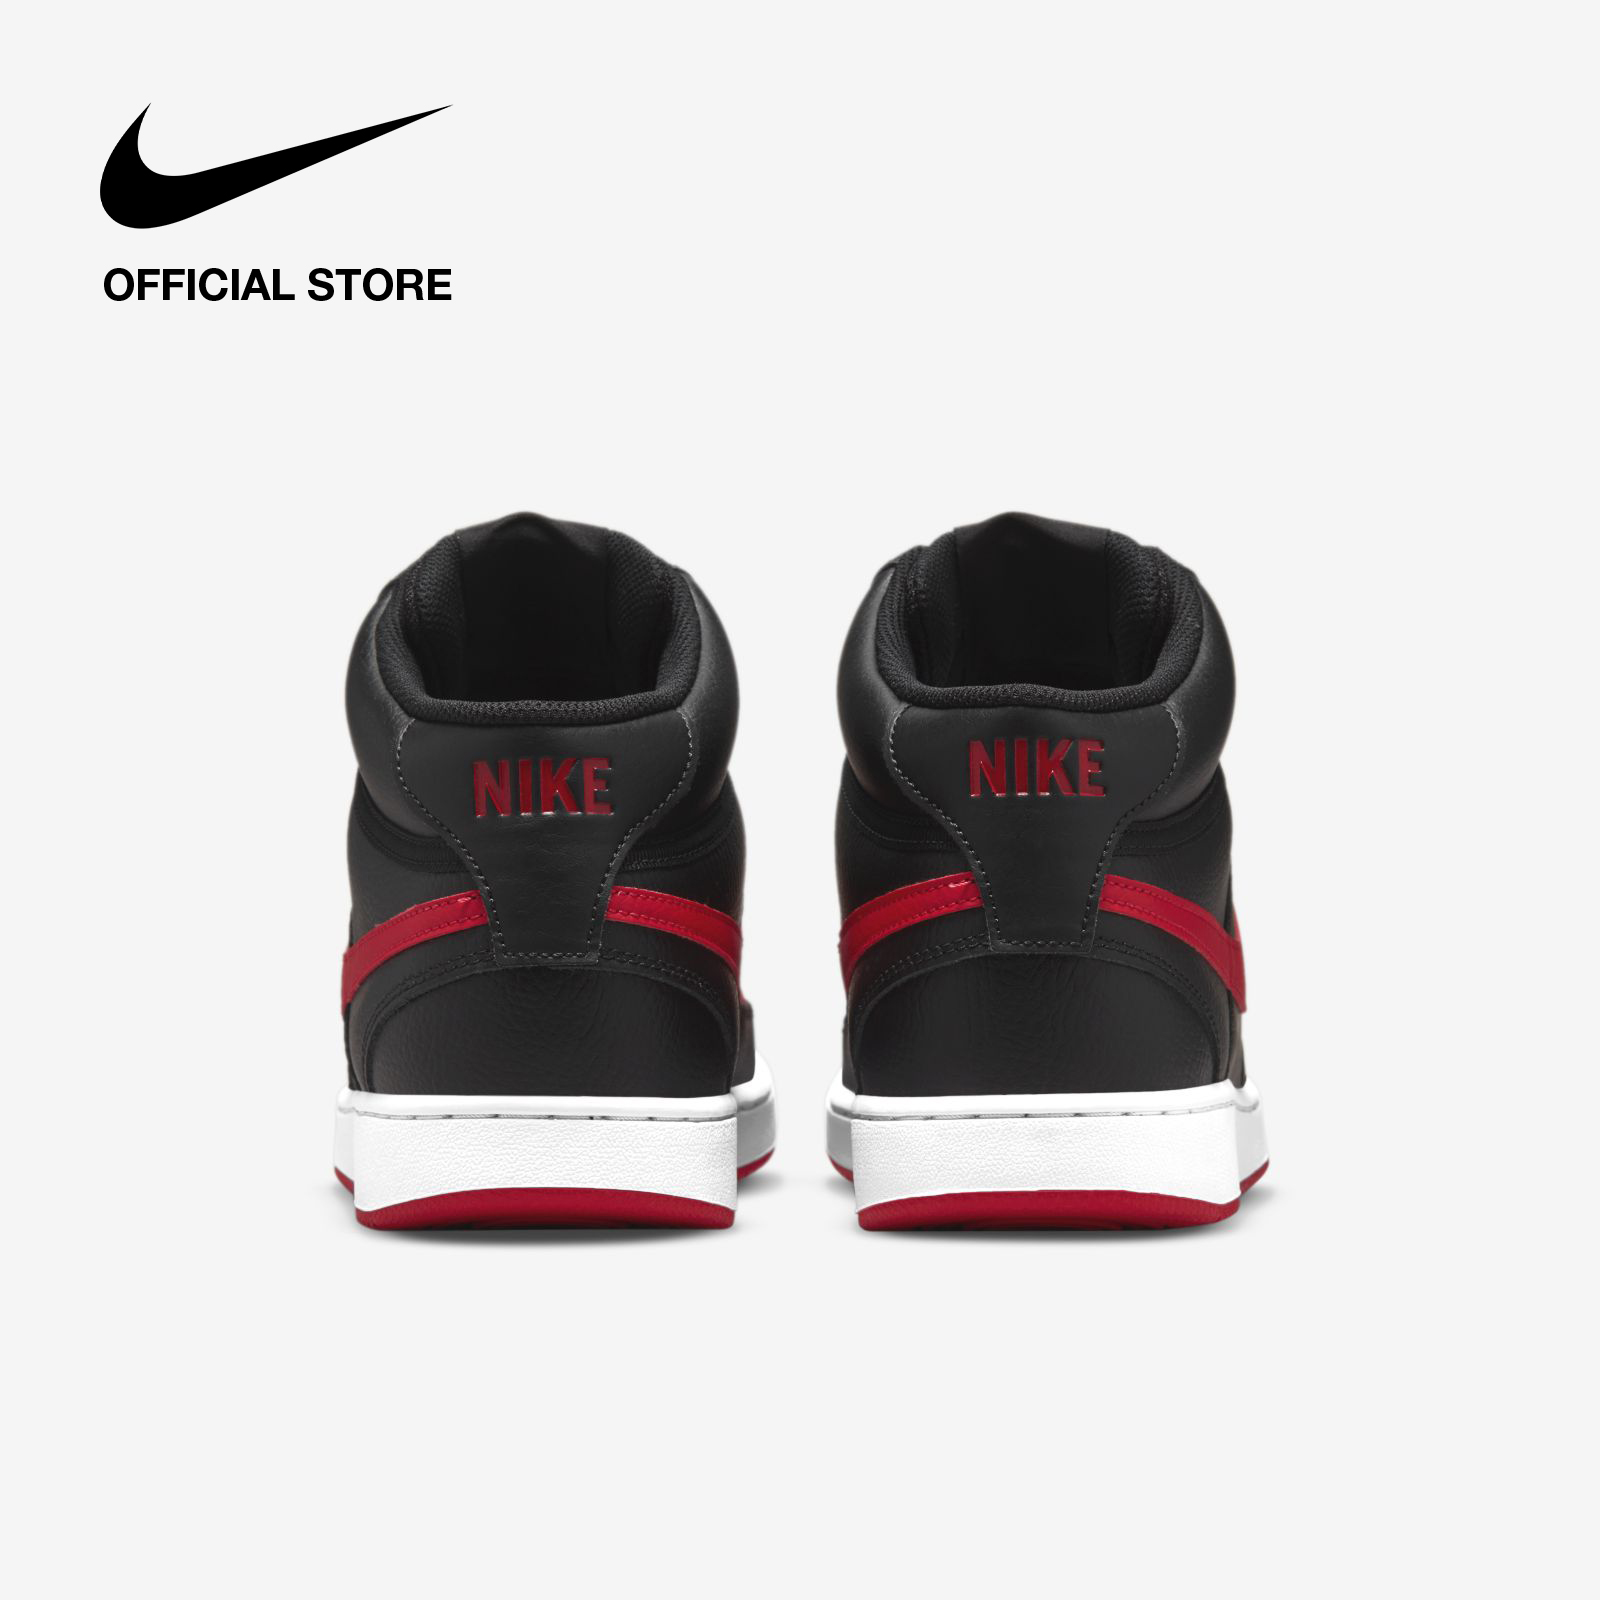 Nike Men's Court Vision Mid Shoes - Black รองเท้าผู้ชาย Nike Court Vision Mid - สีดำ